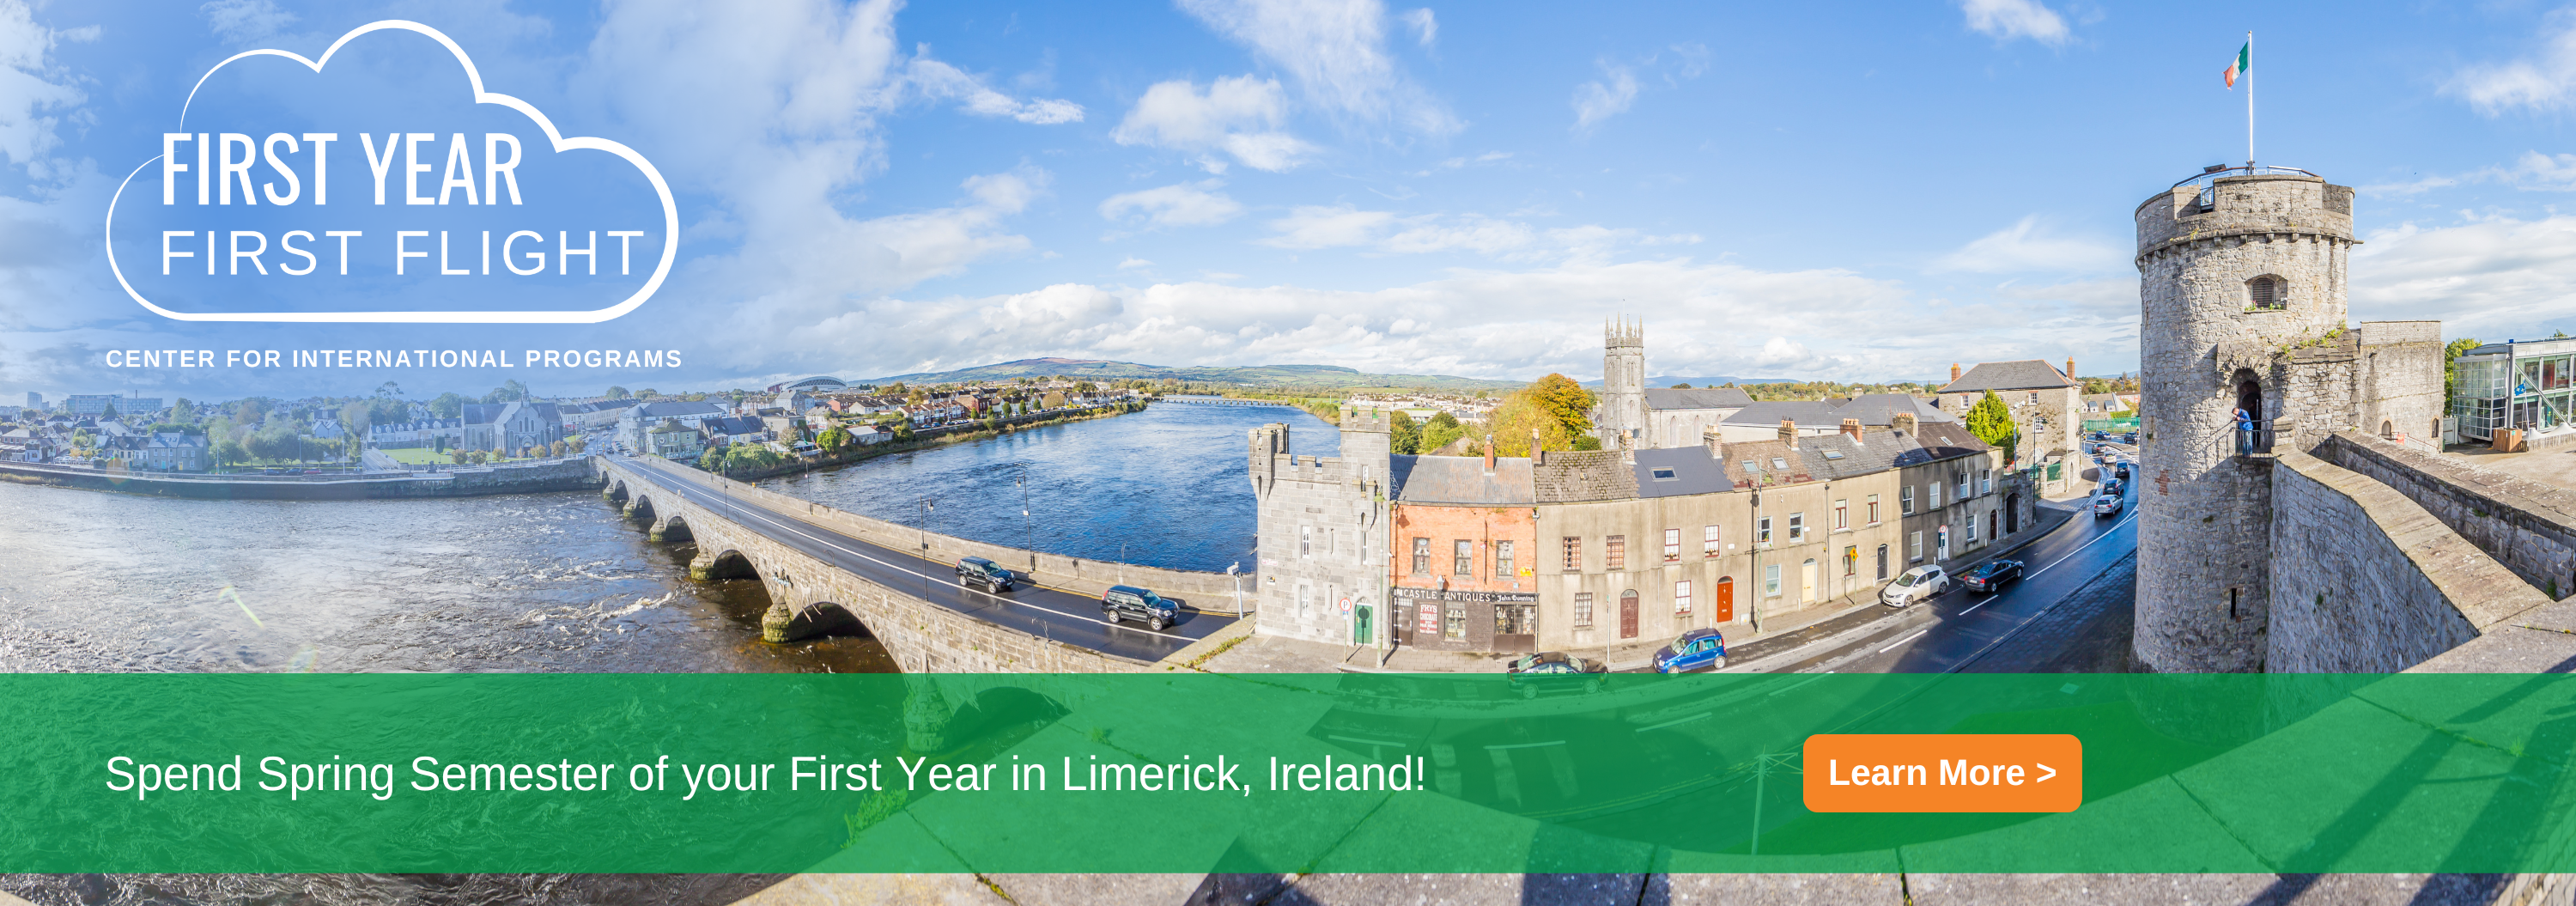 First Year, First Flight: Limerick